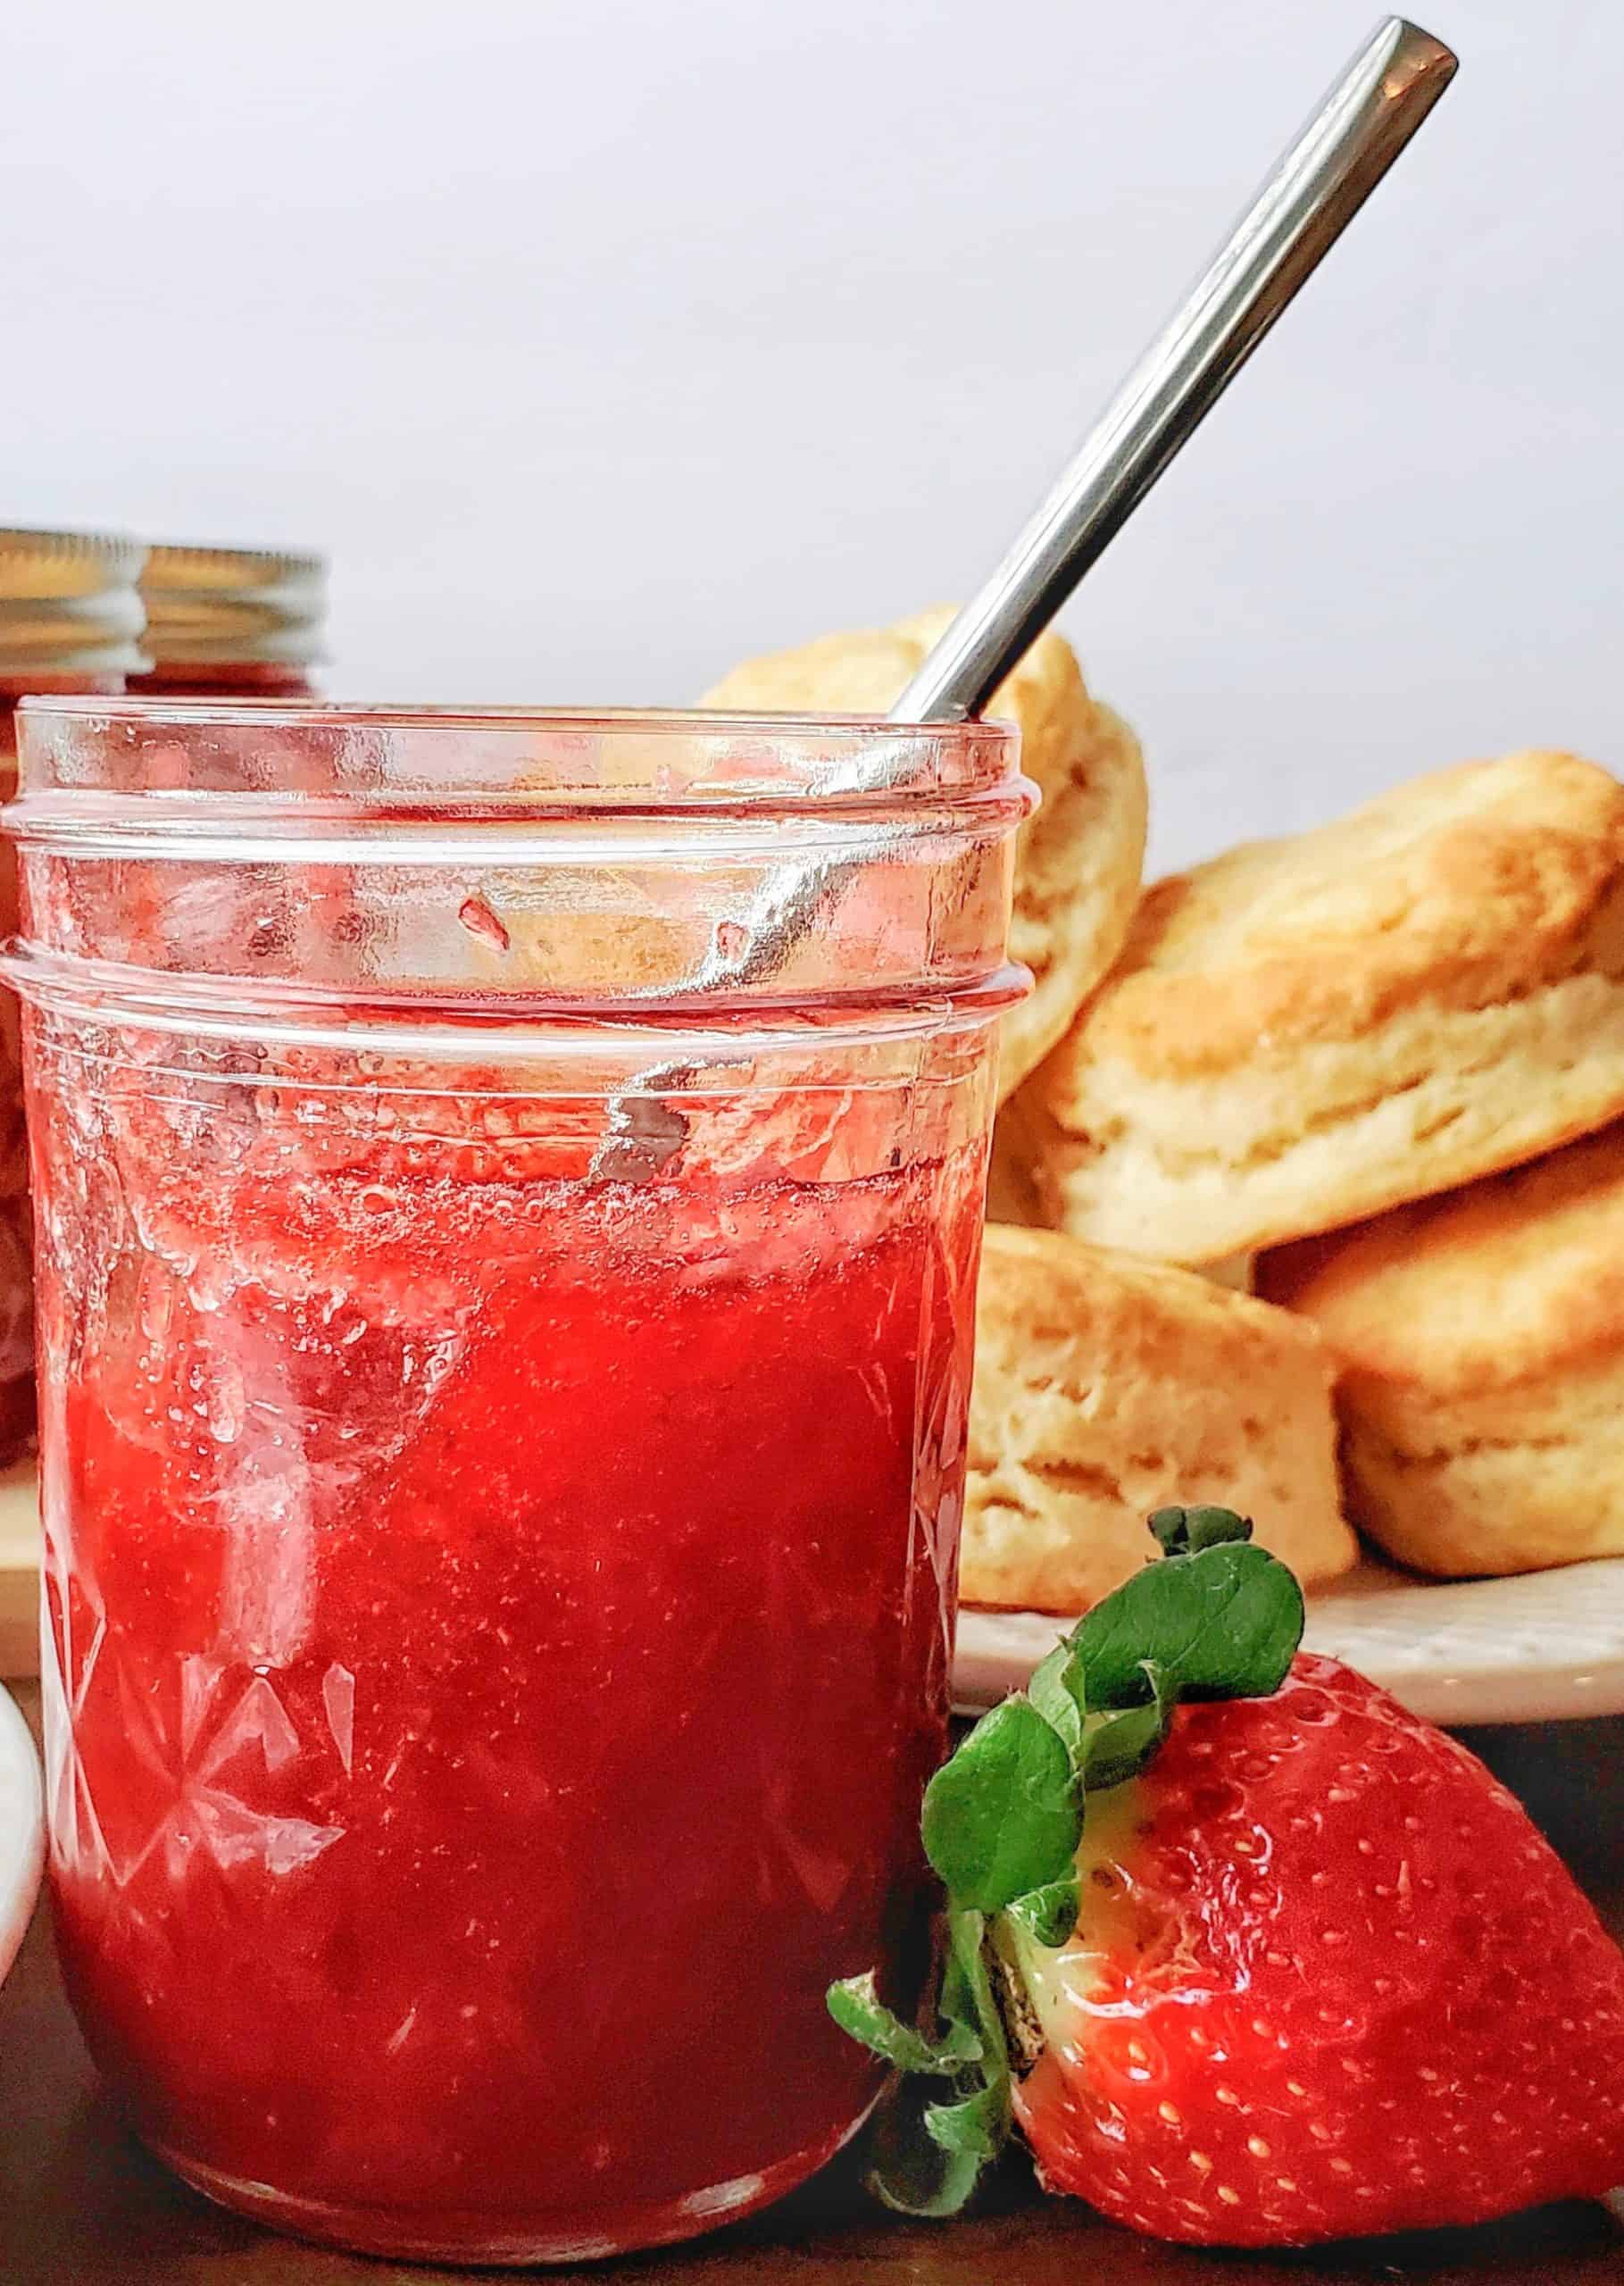 Strawberry Rhubarb Jam in jar with spoon. 